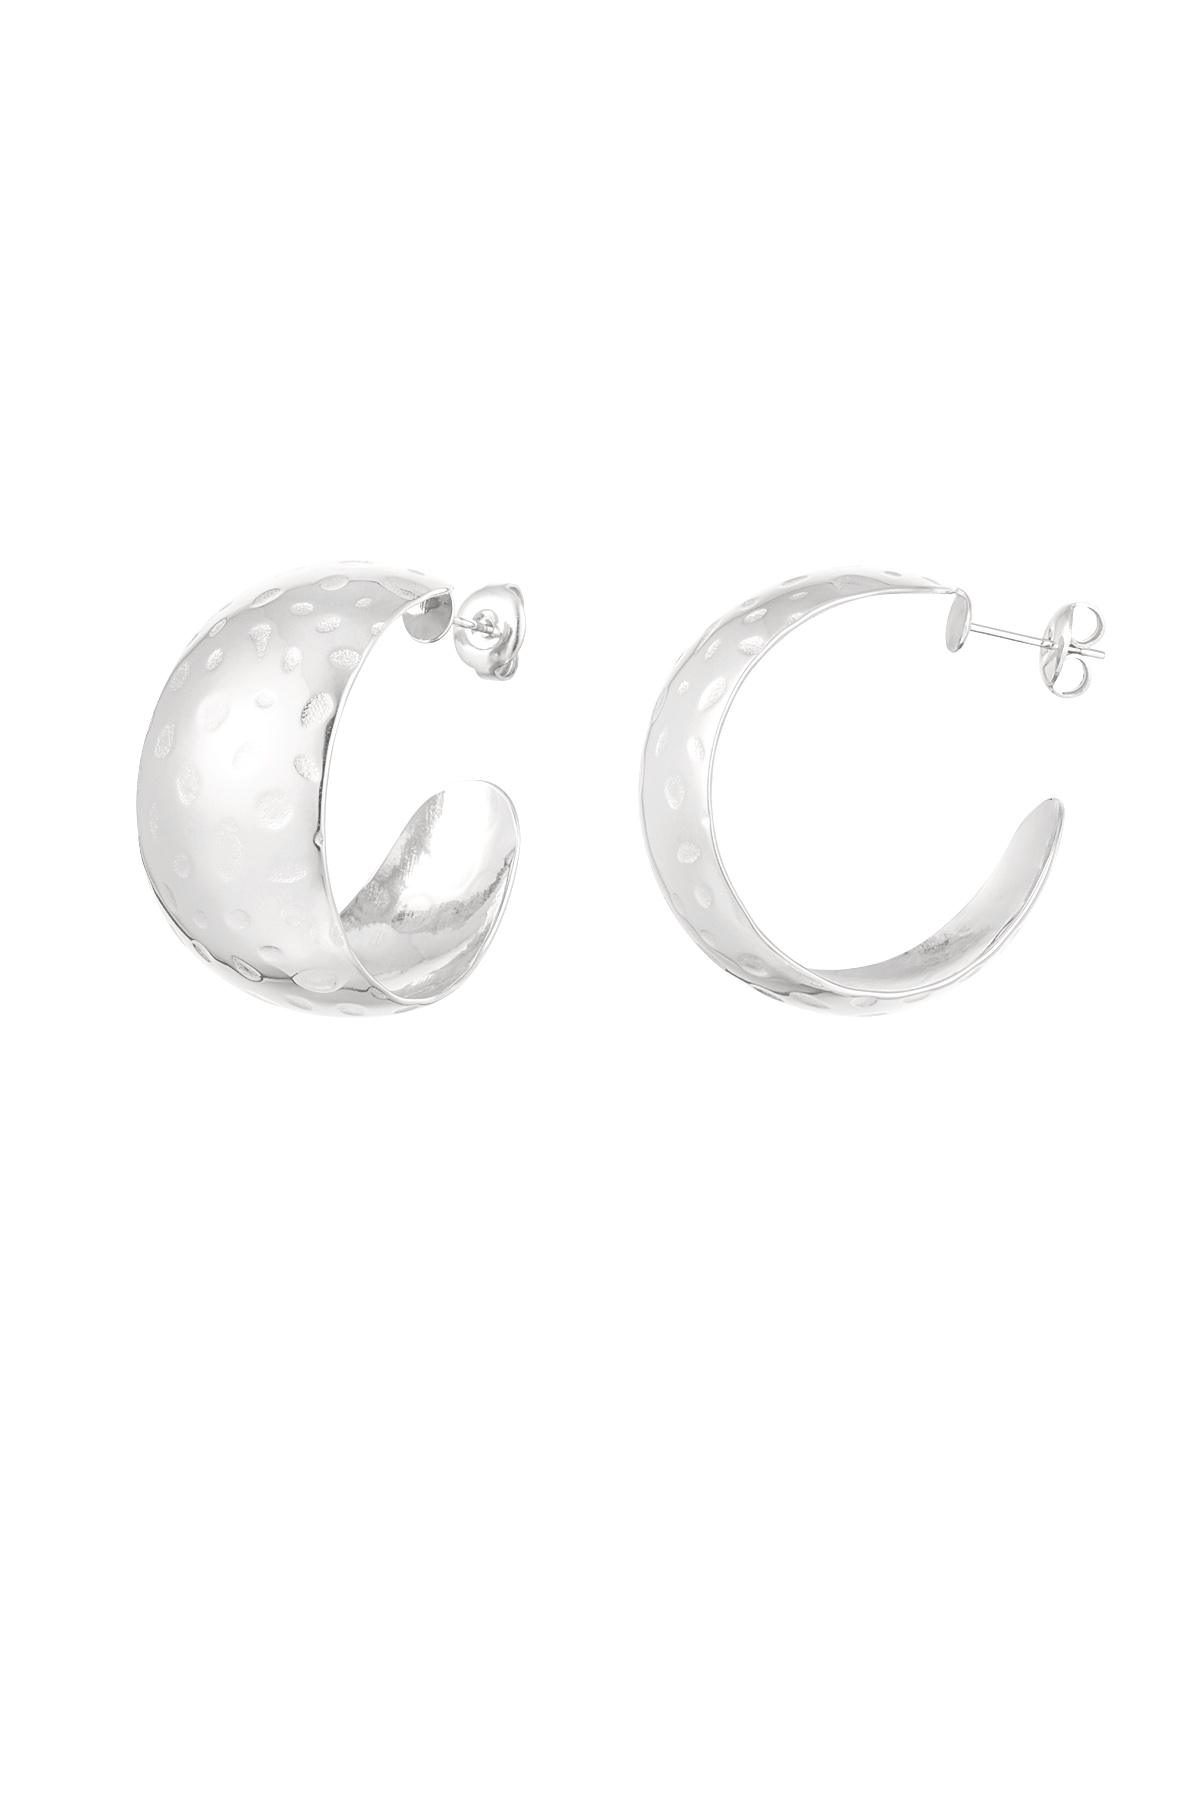 Earrings moon large dots - silver h5 